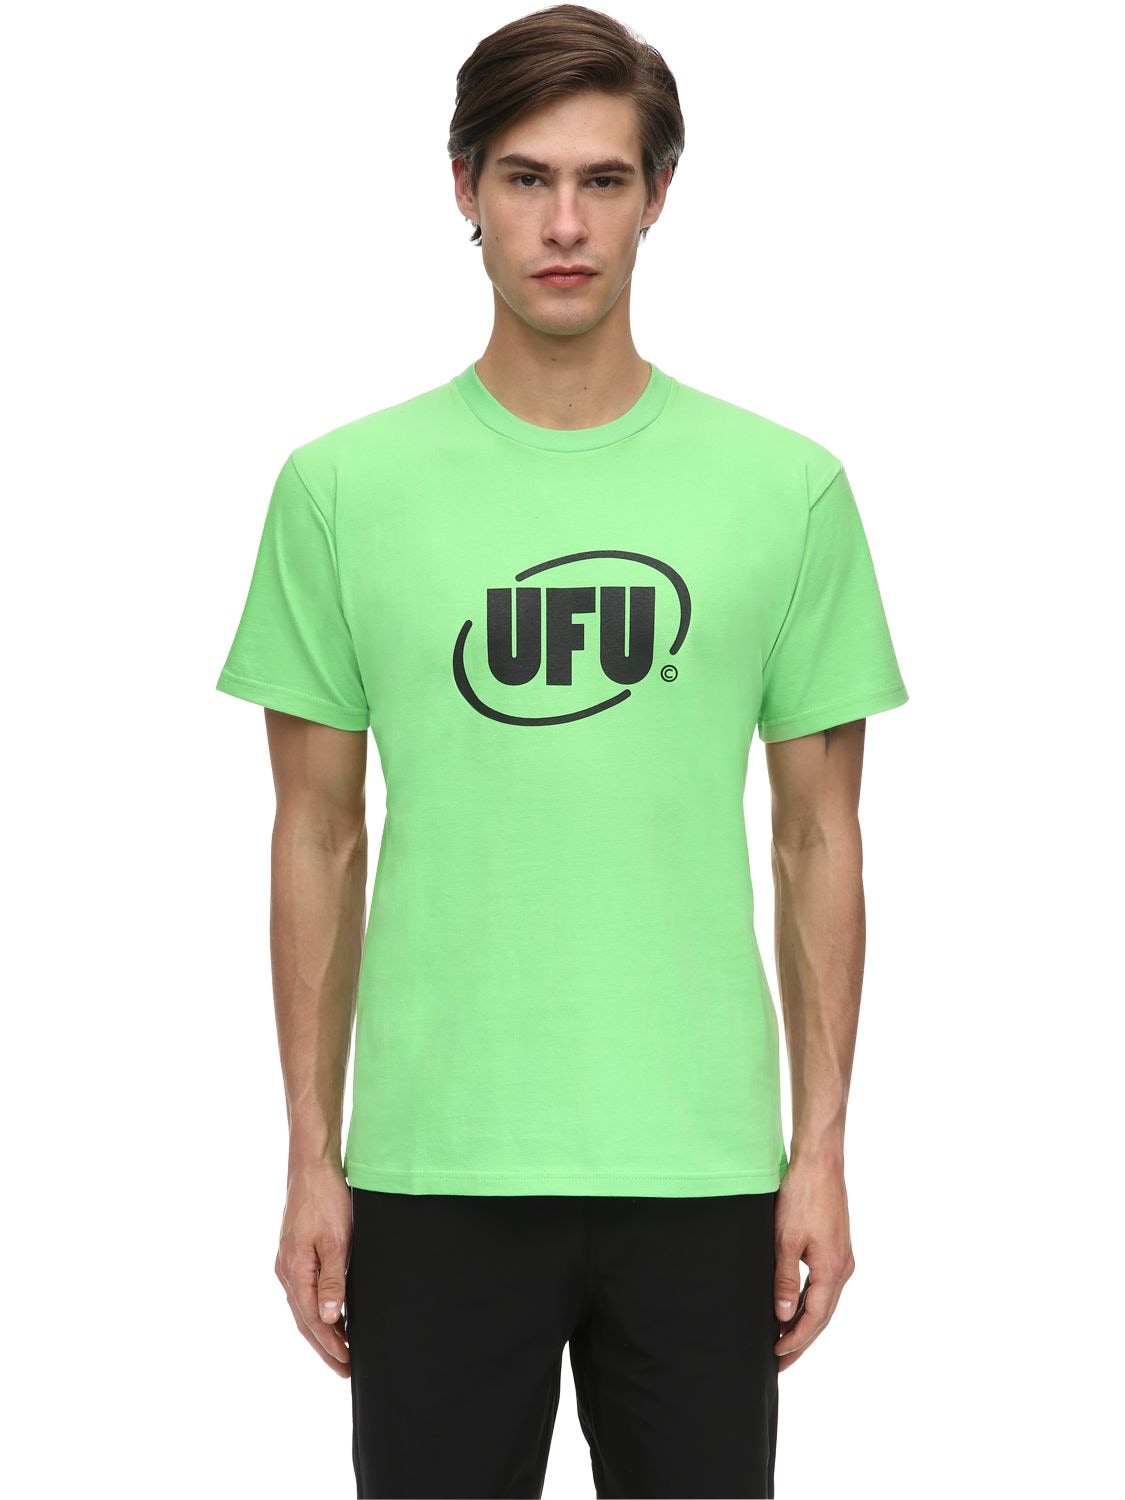 Ufu - Used Future Round Logo Cotton Jersey T-shirt In Green